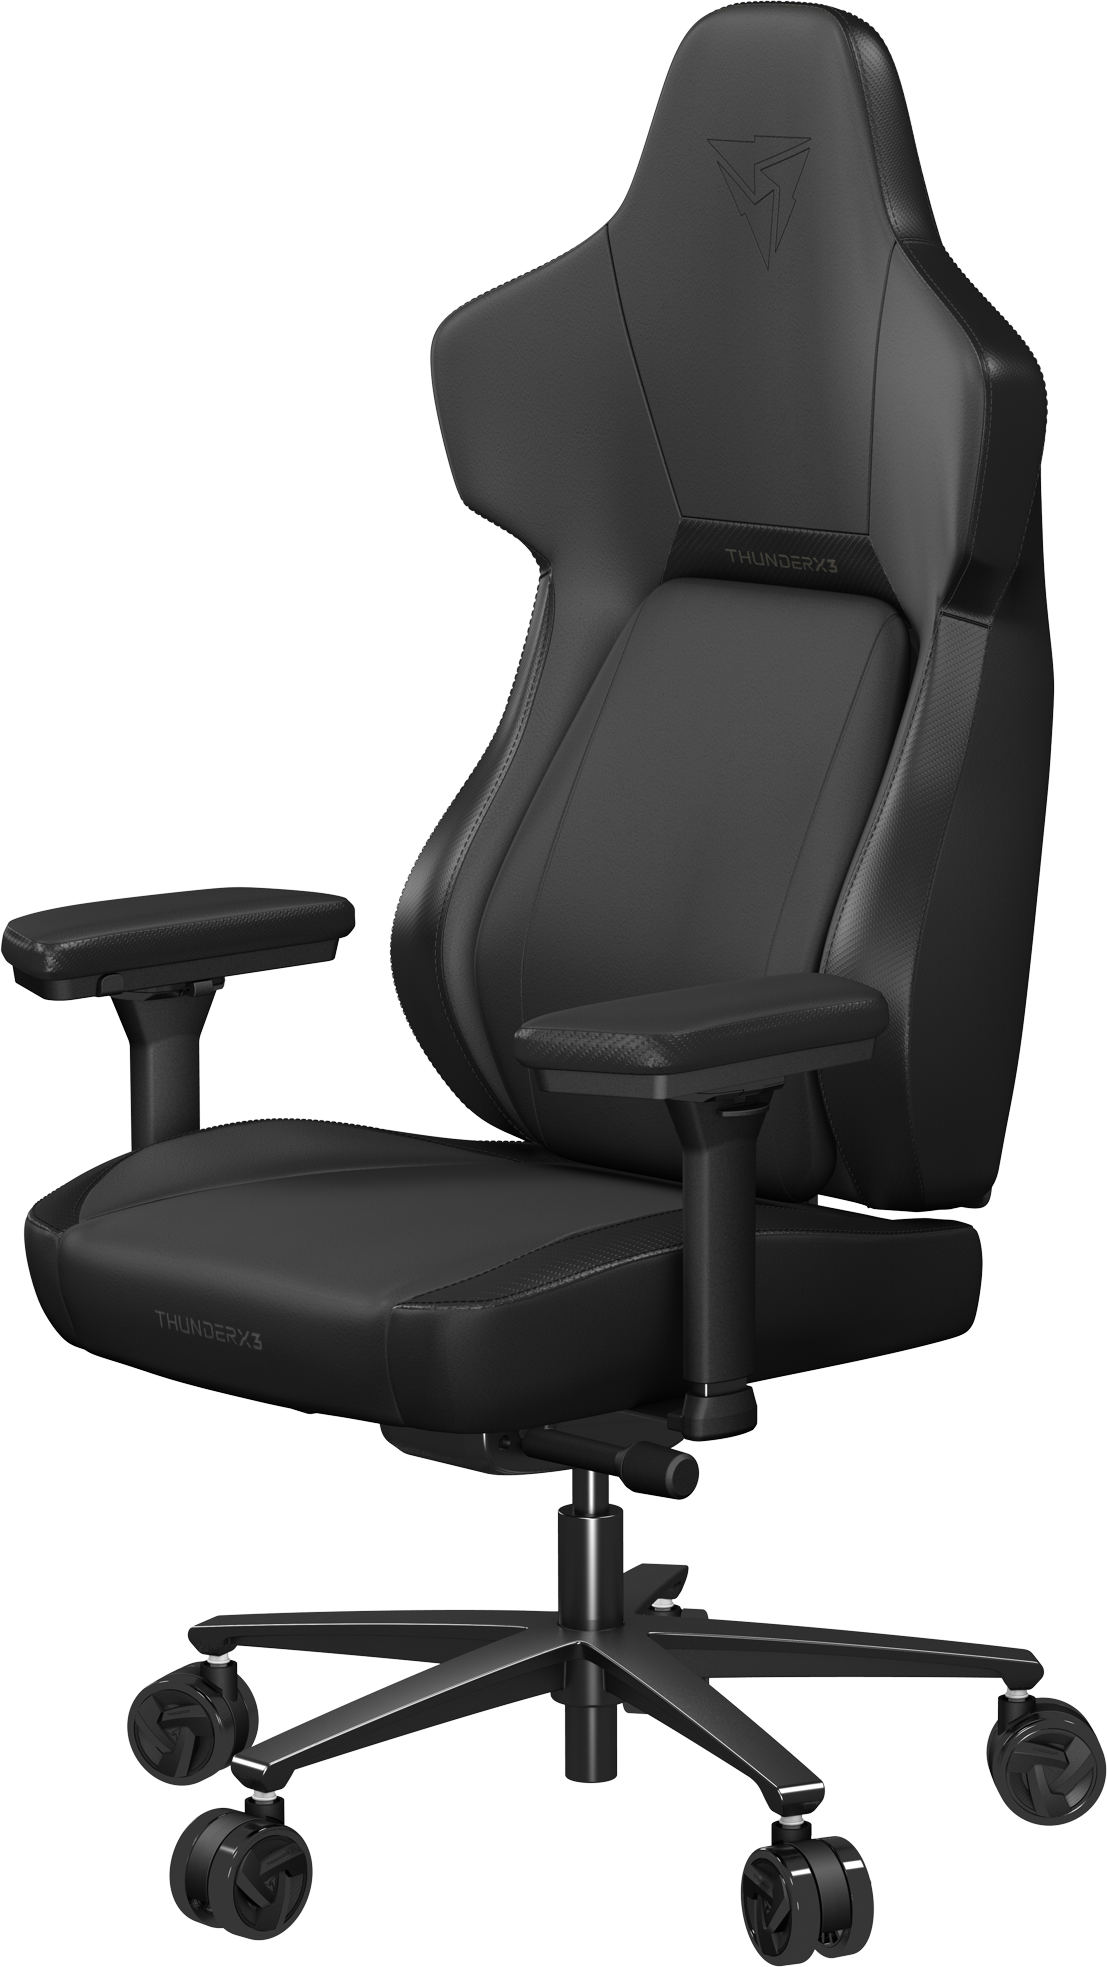 ThunderX3 - ThunderX3 CORE PU Leather Gaming Chair - Black